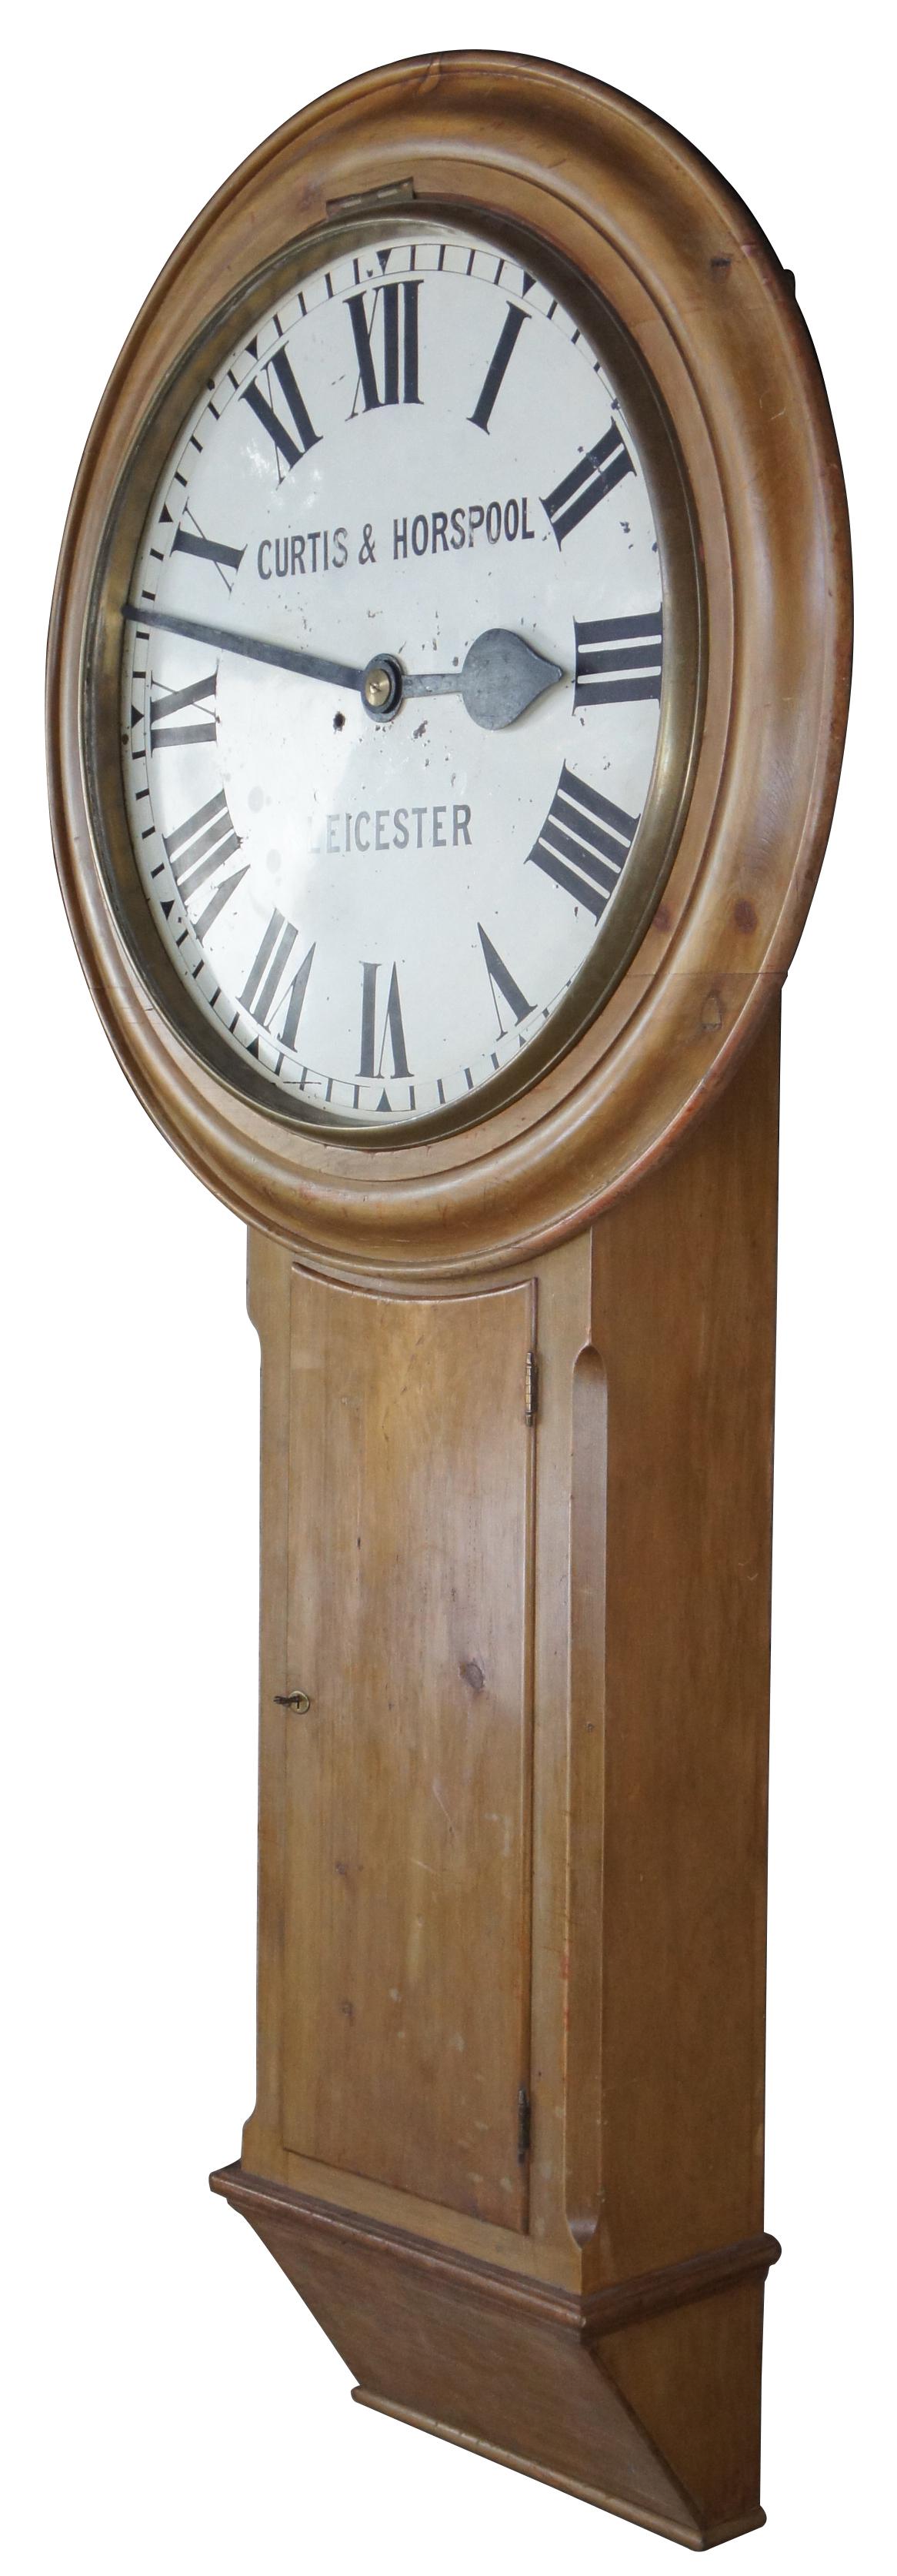 tavern clock for sale